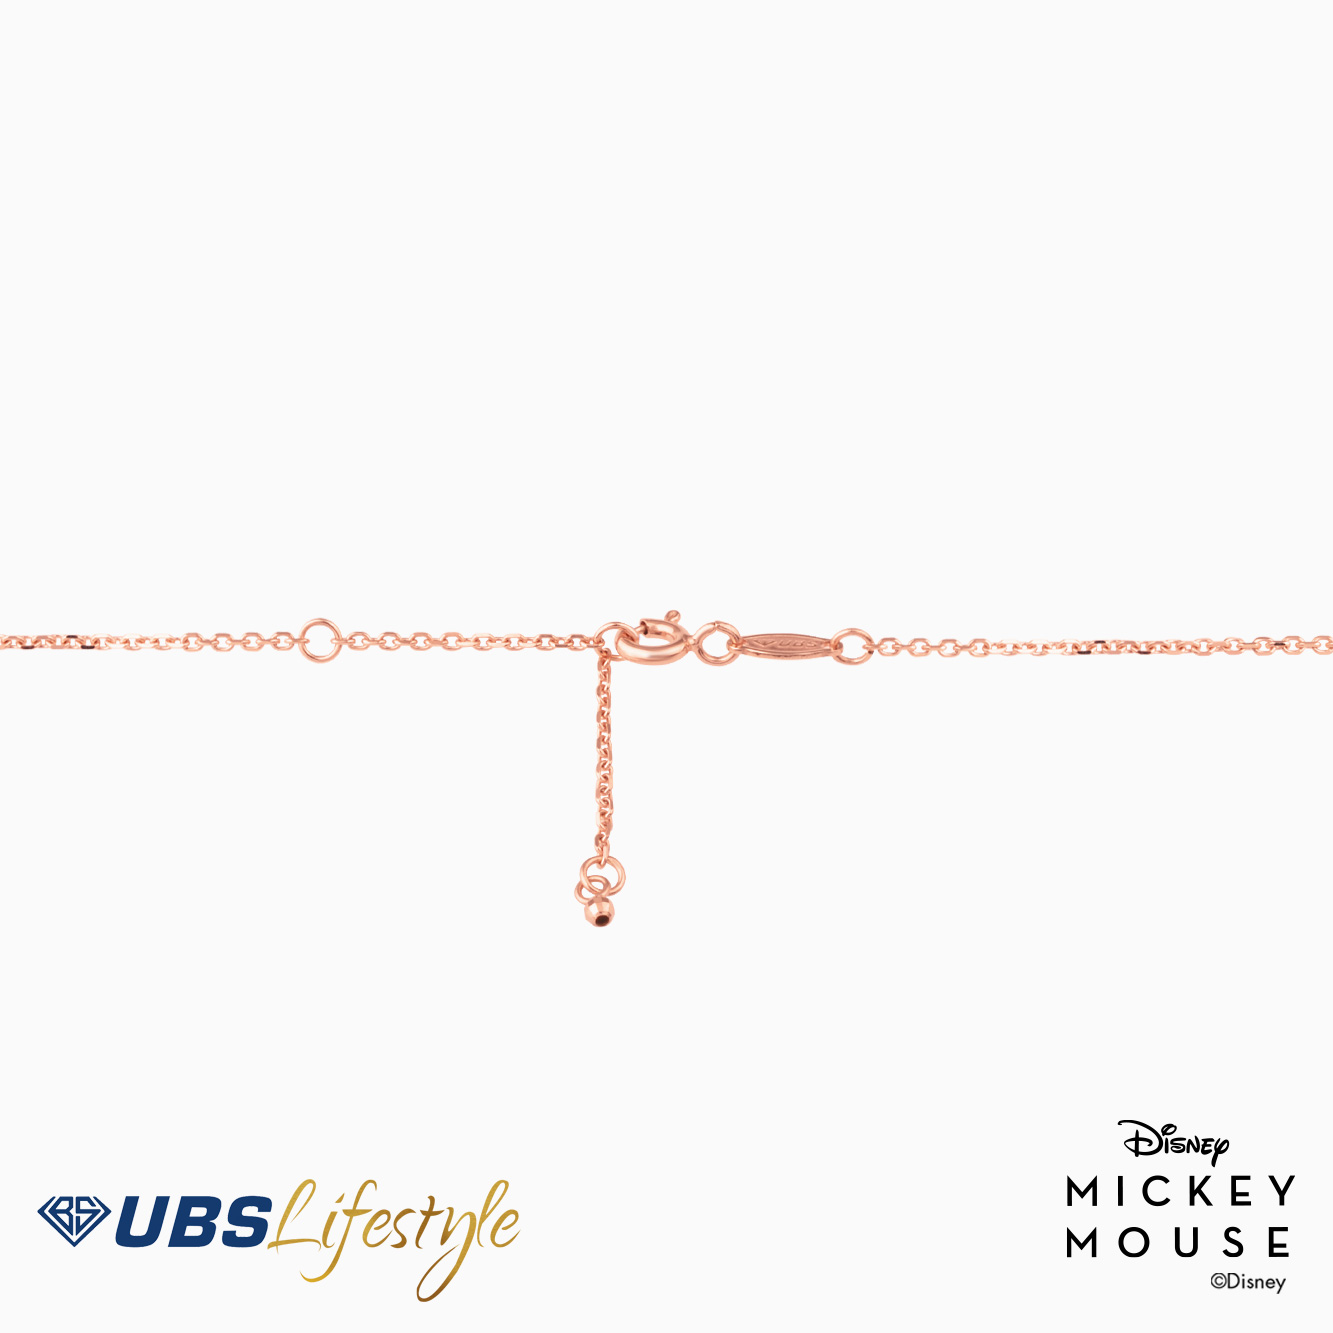 UBS Gold Kalung Emas Disney Mickey Mouse - Kky0048 - 17K